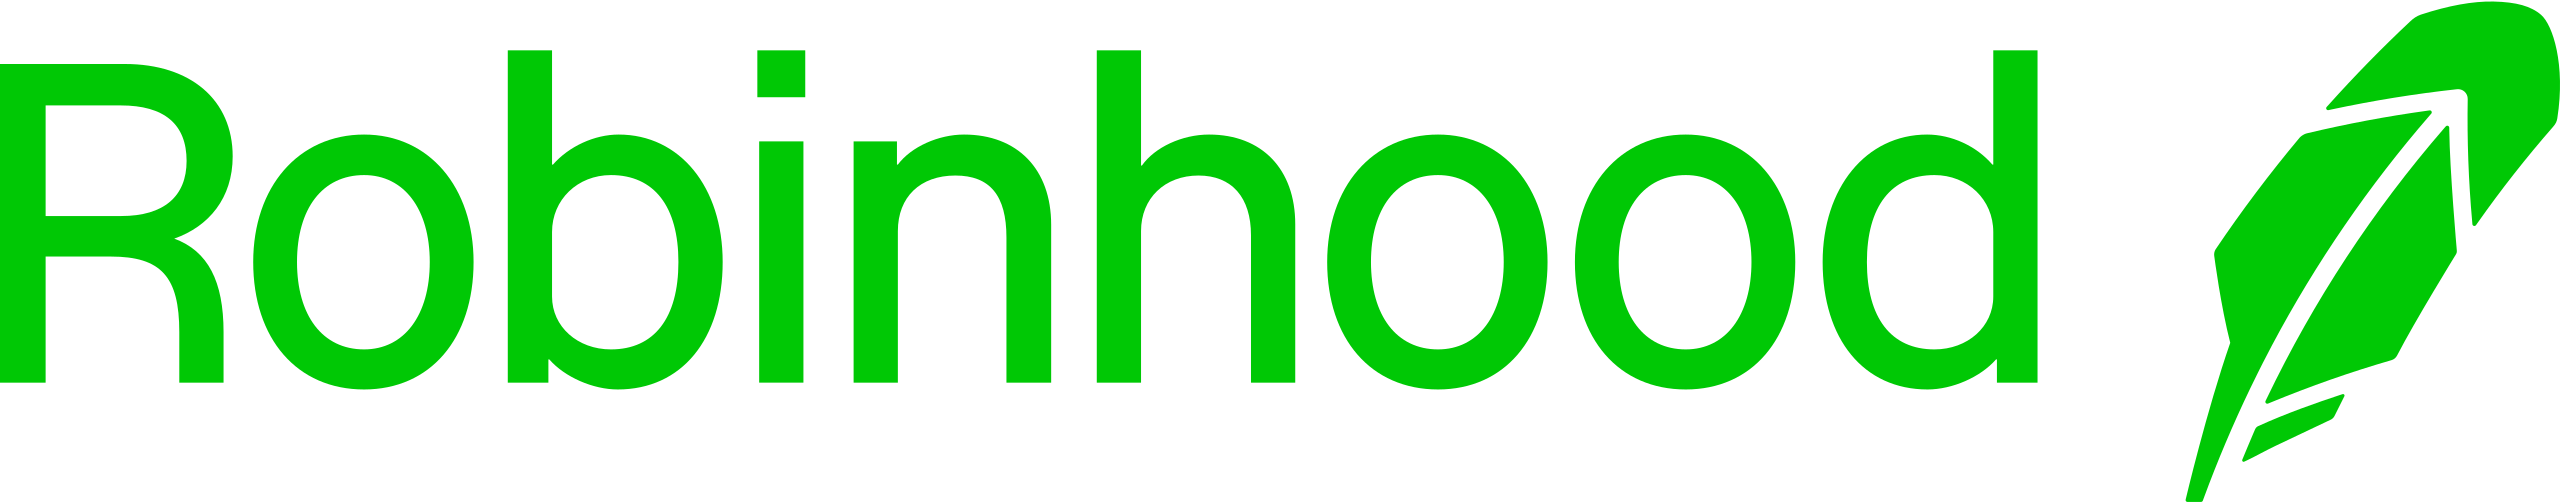 Robinhood_(company)_logo.svg